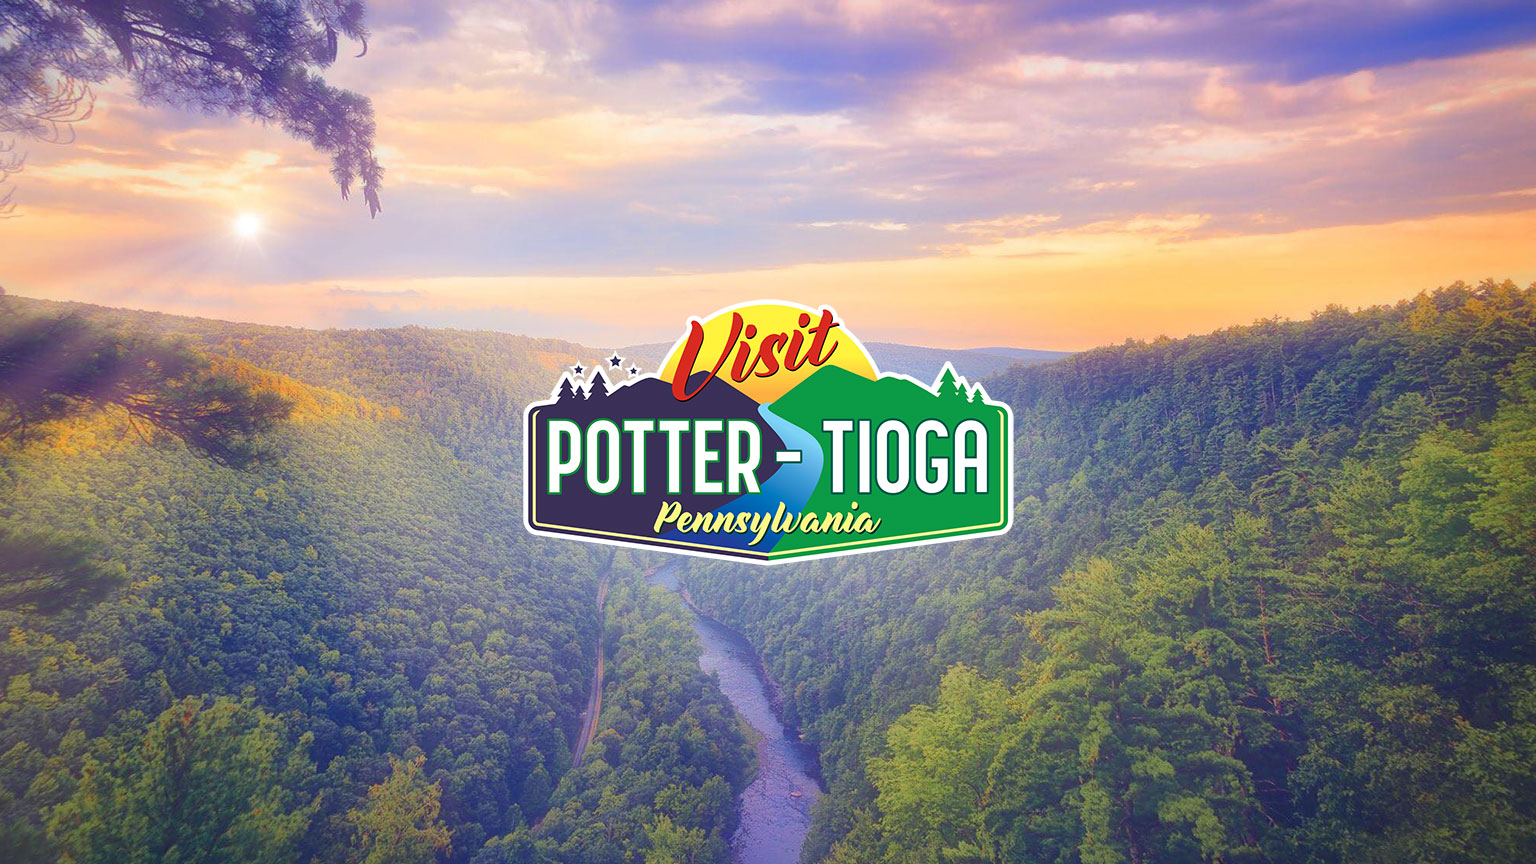 Visit Potter-Tioga News